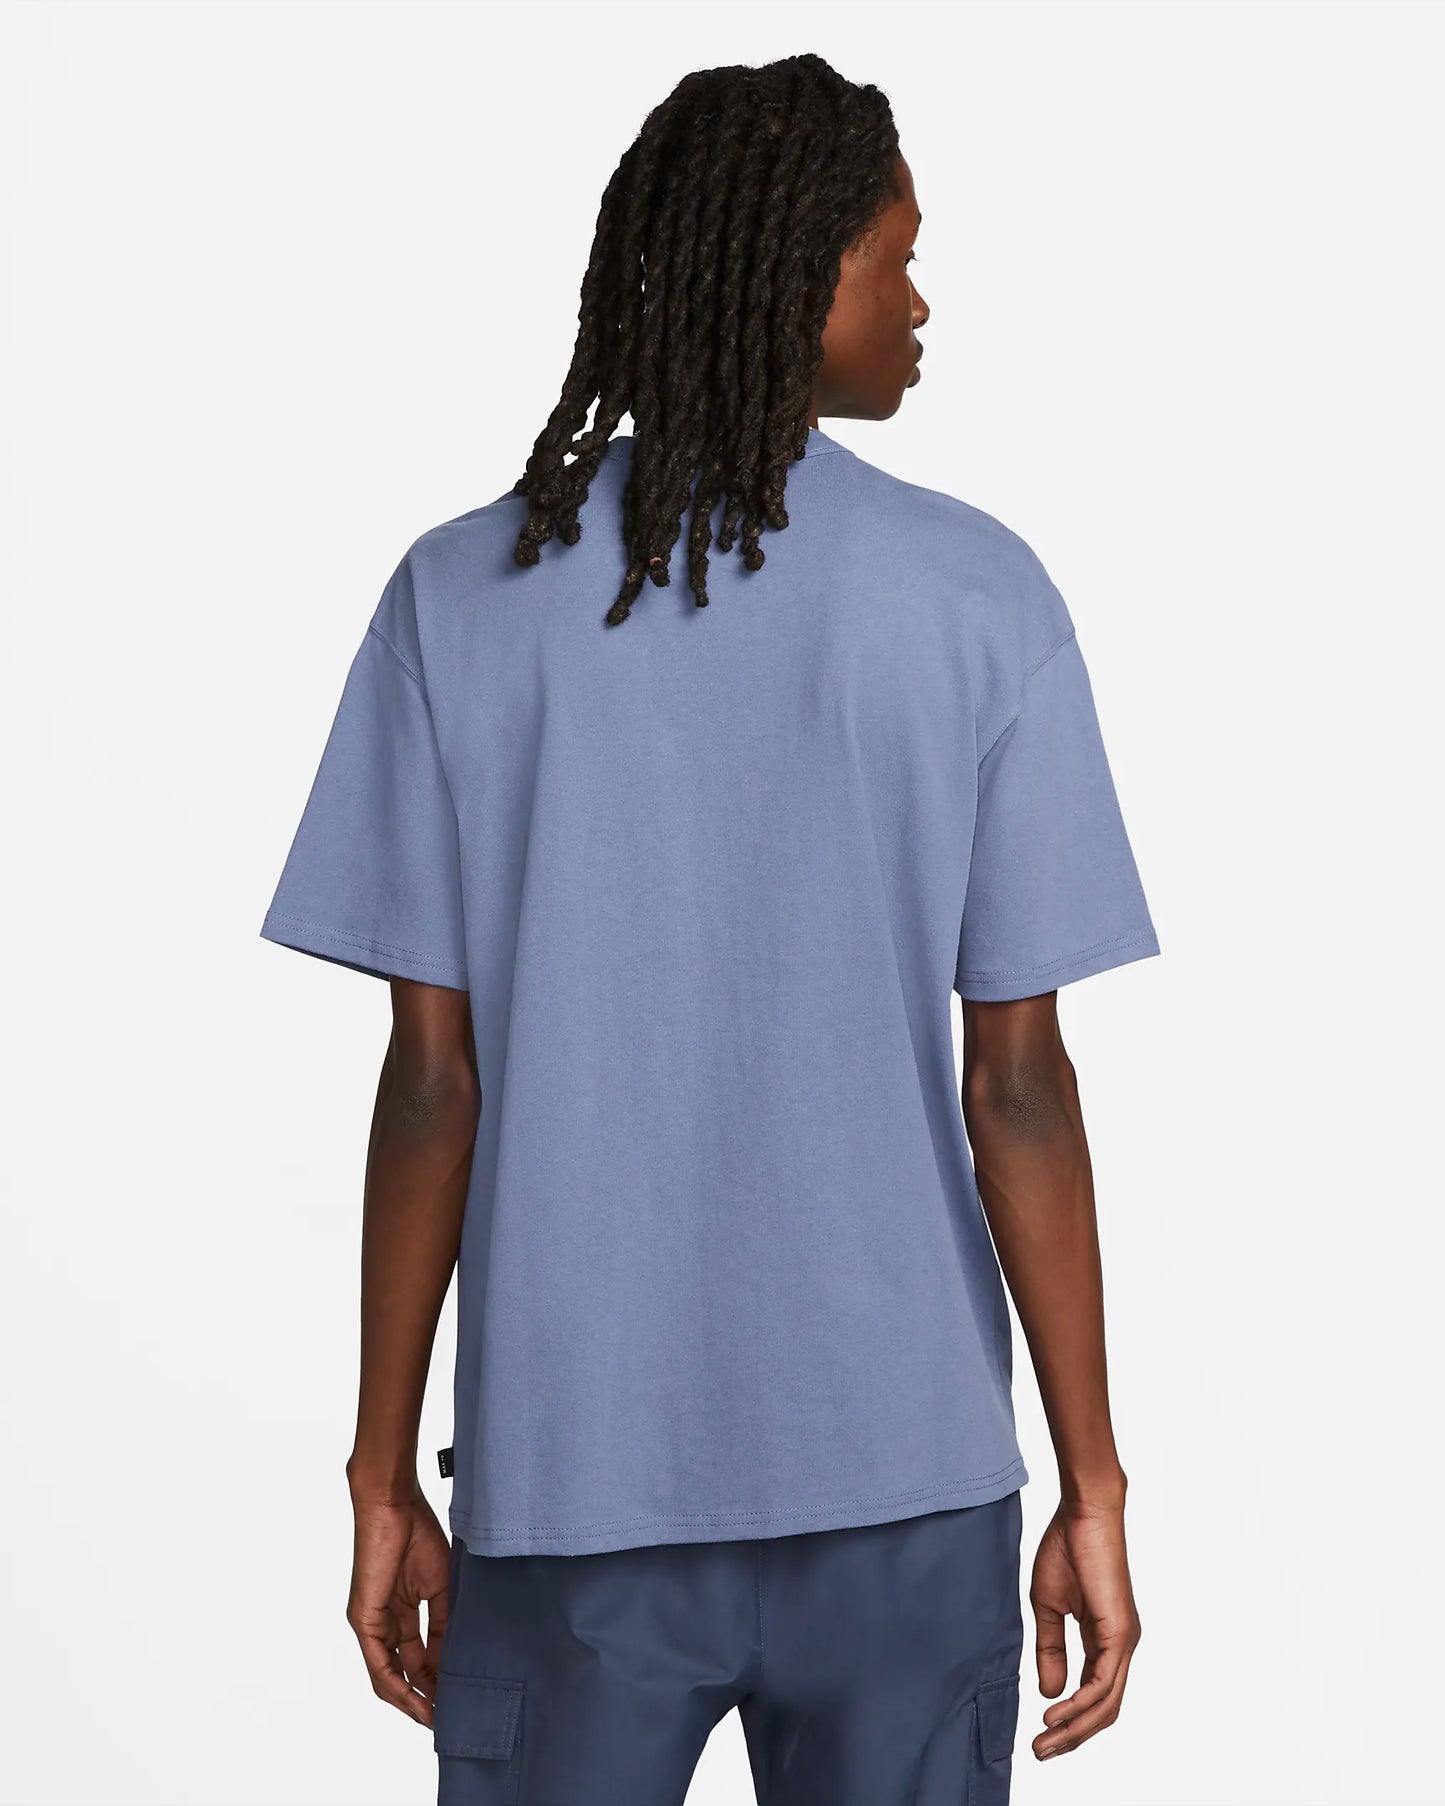 Nike Men's Sportswear Premium Essentials T-Shirt, Diffused Blue